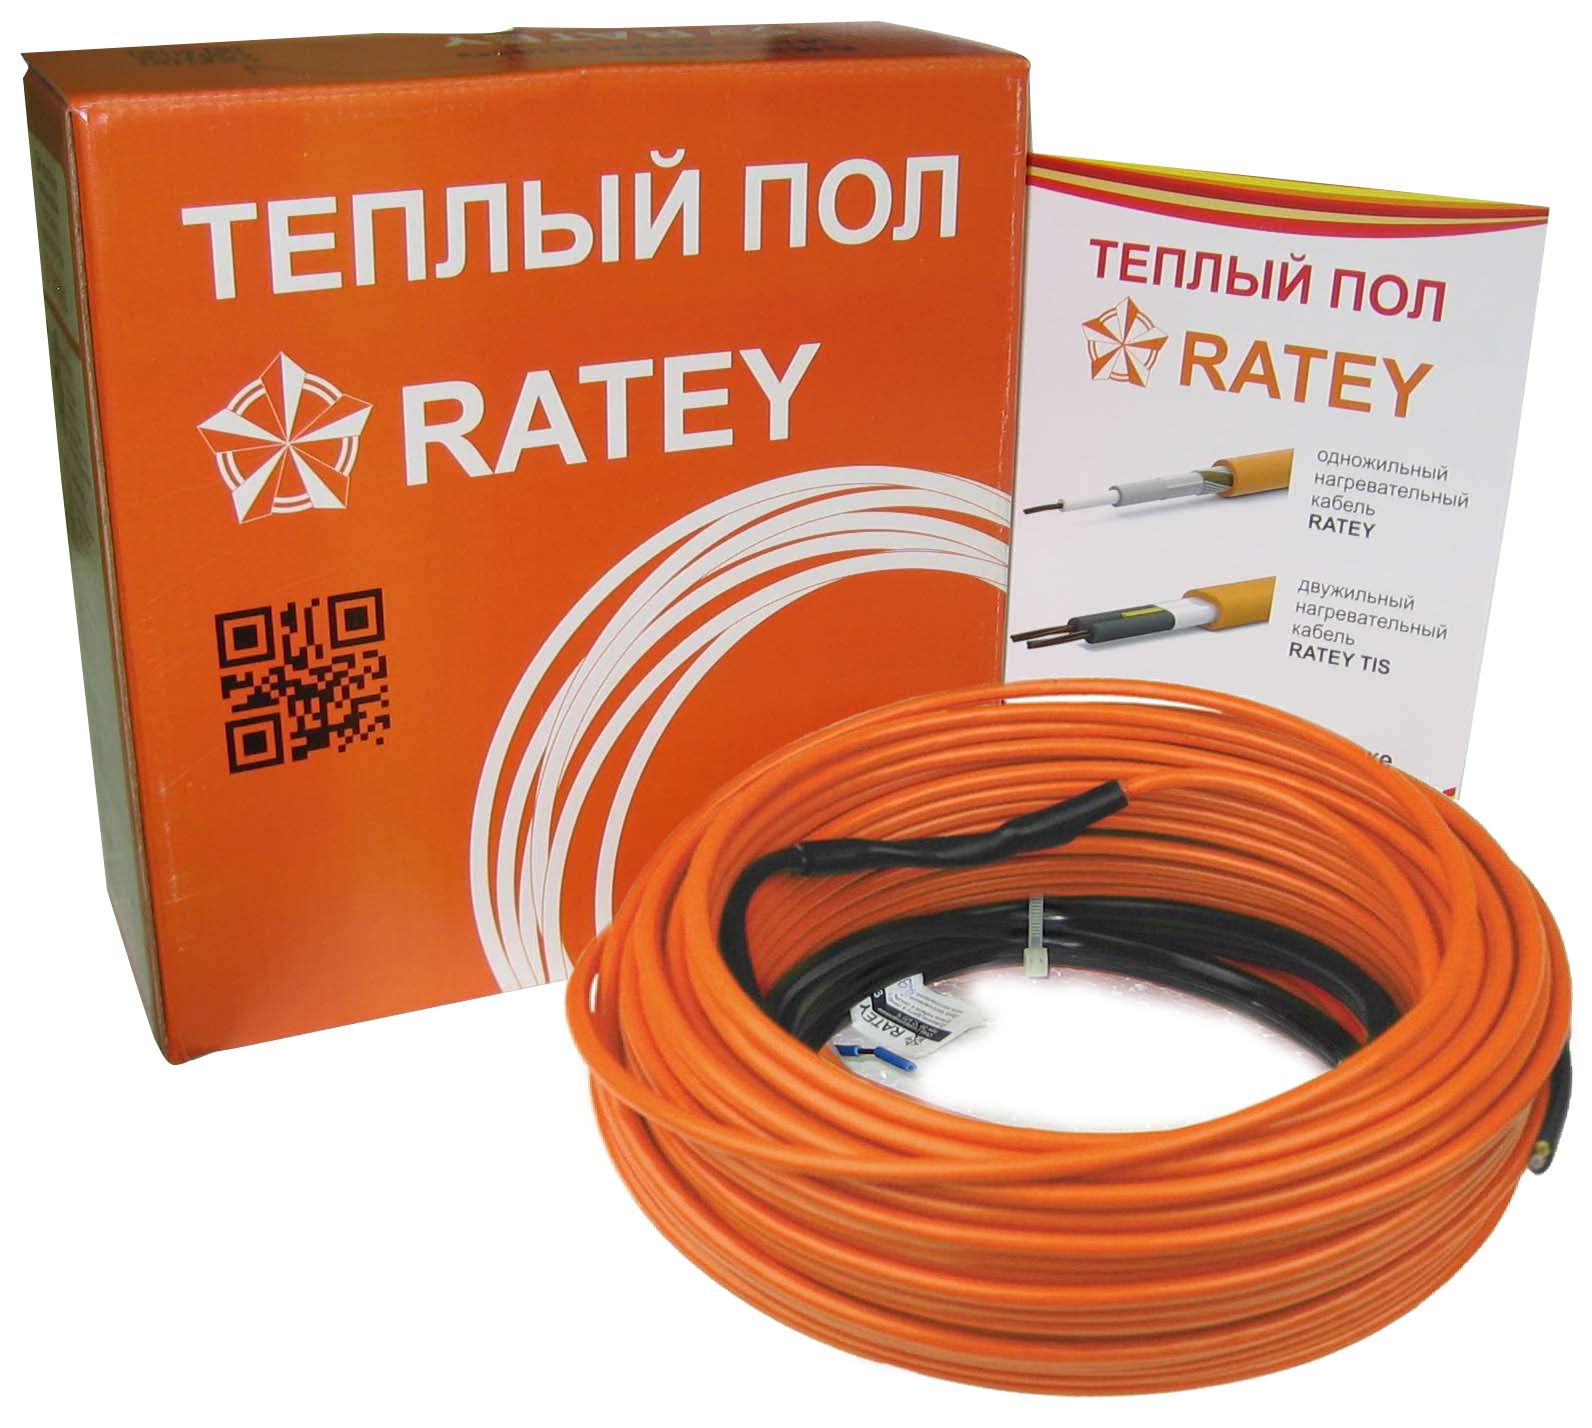 Електрична тепла підлога Ratey RD1 0.670